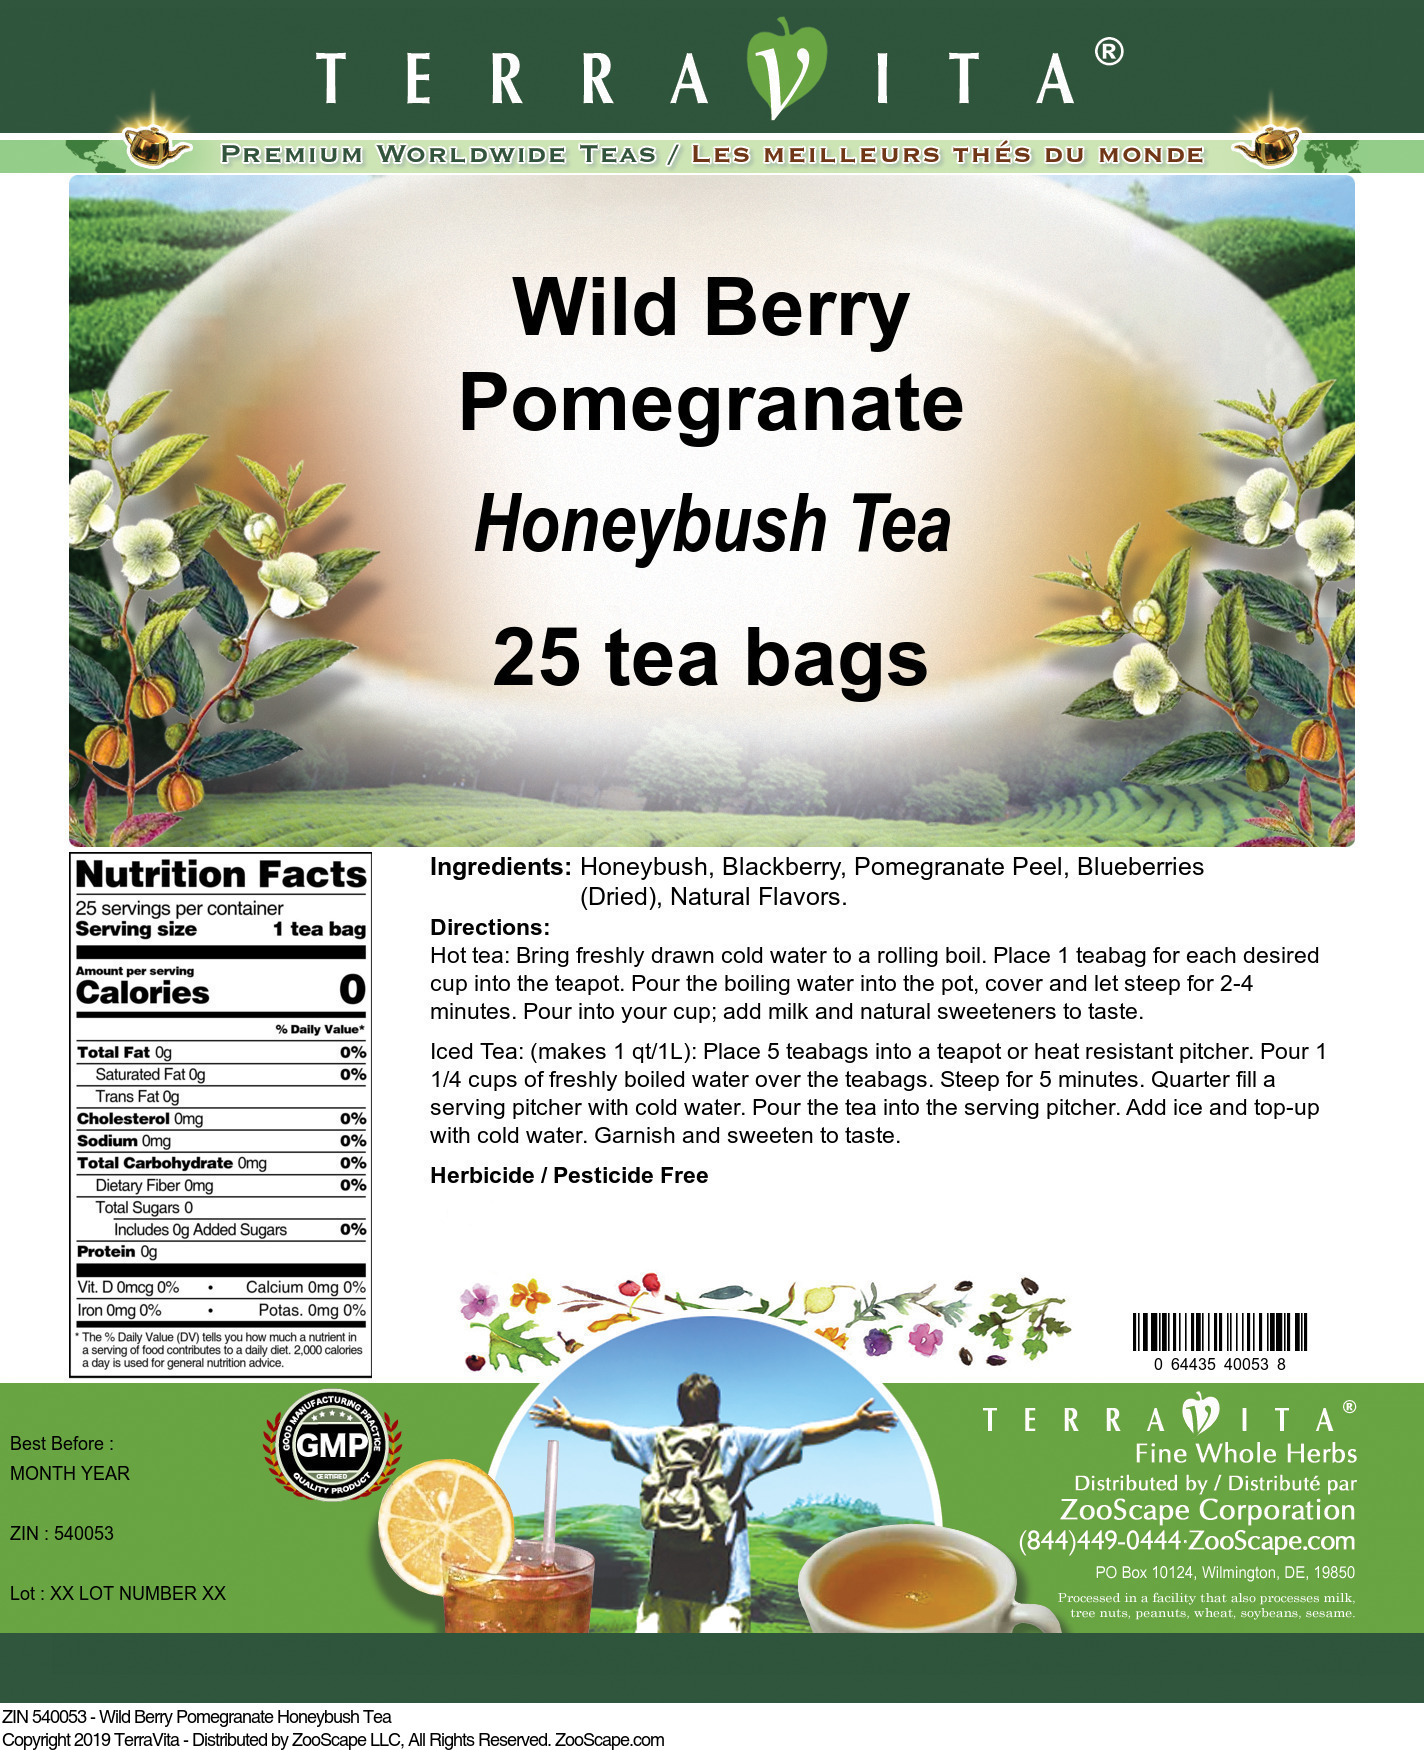 Wild Berry Pomegranate Honeybush Tea - Label